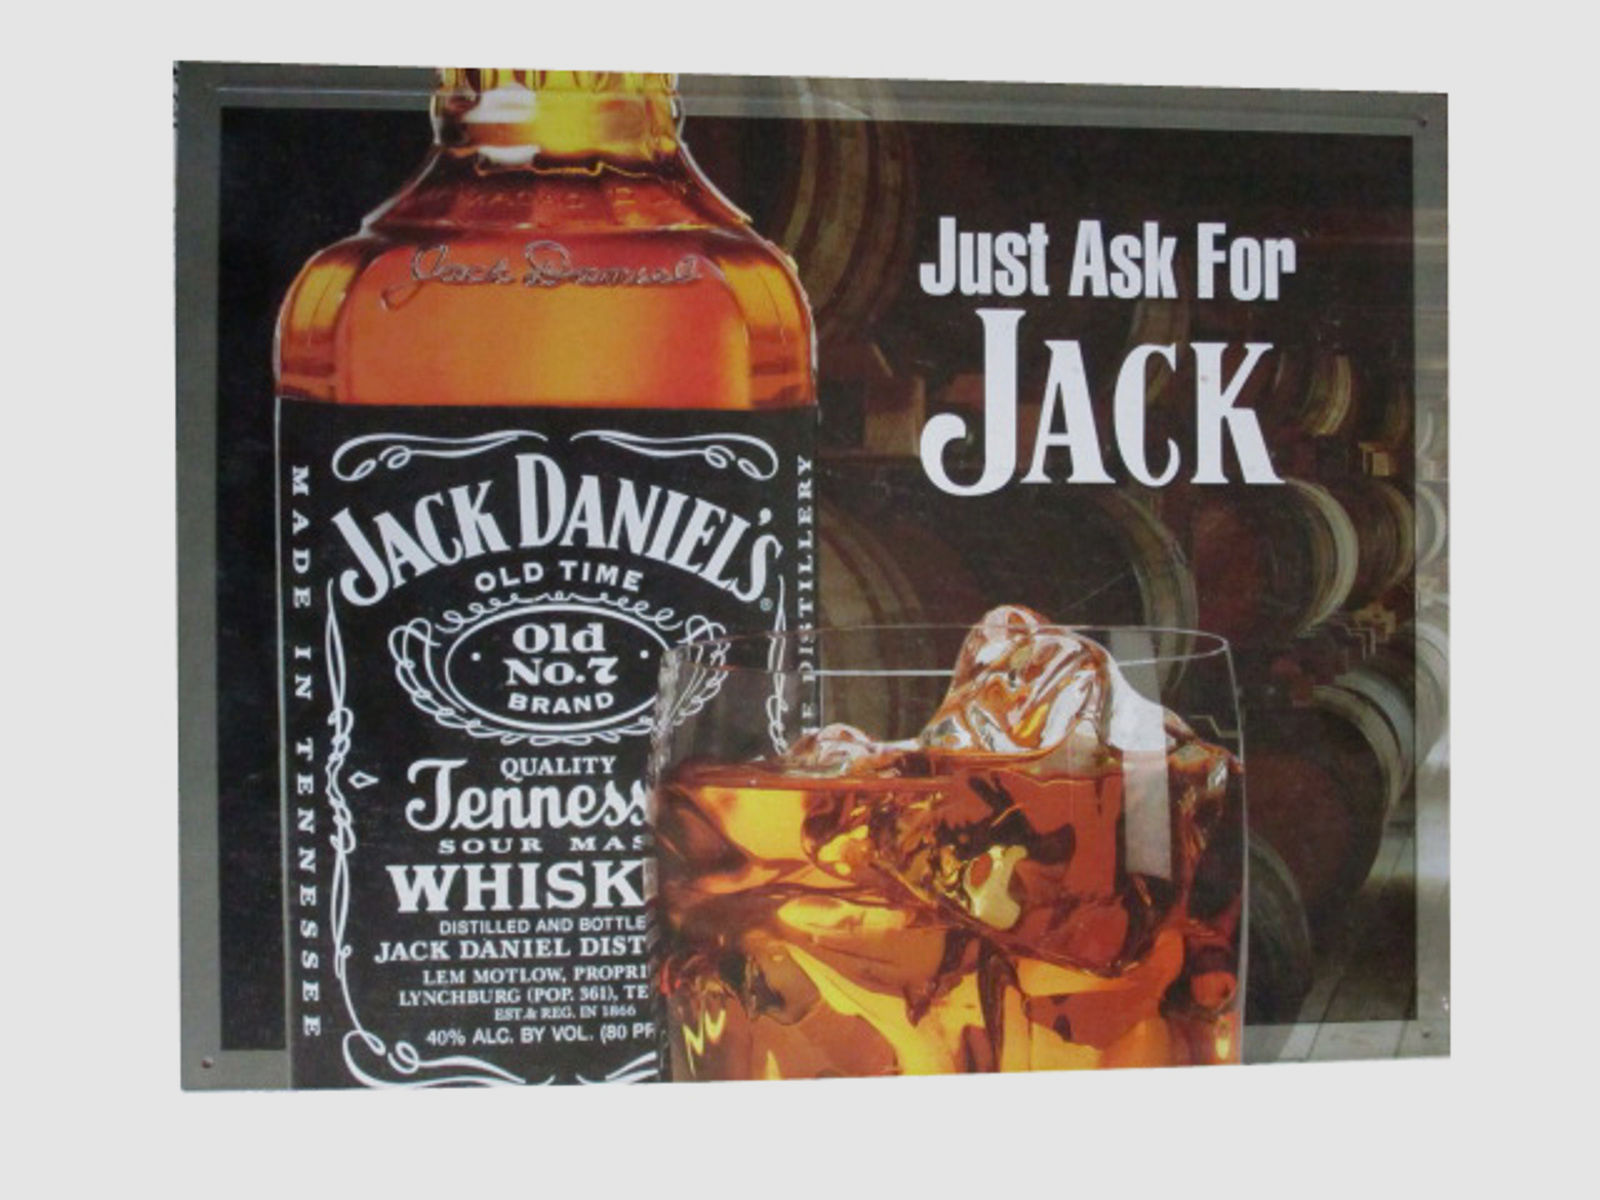 Blechschild "Just Ask for Jack"